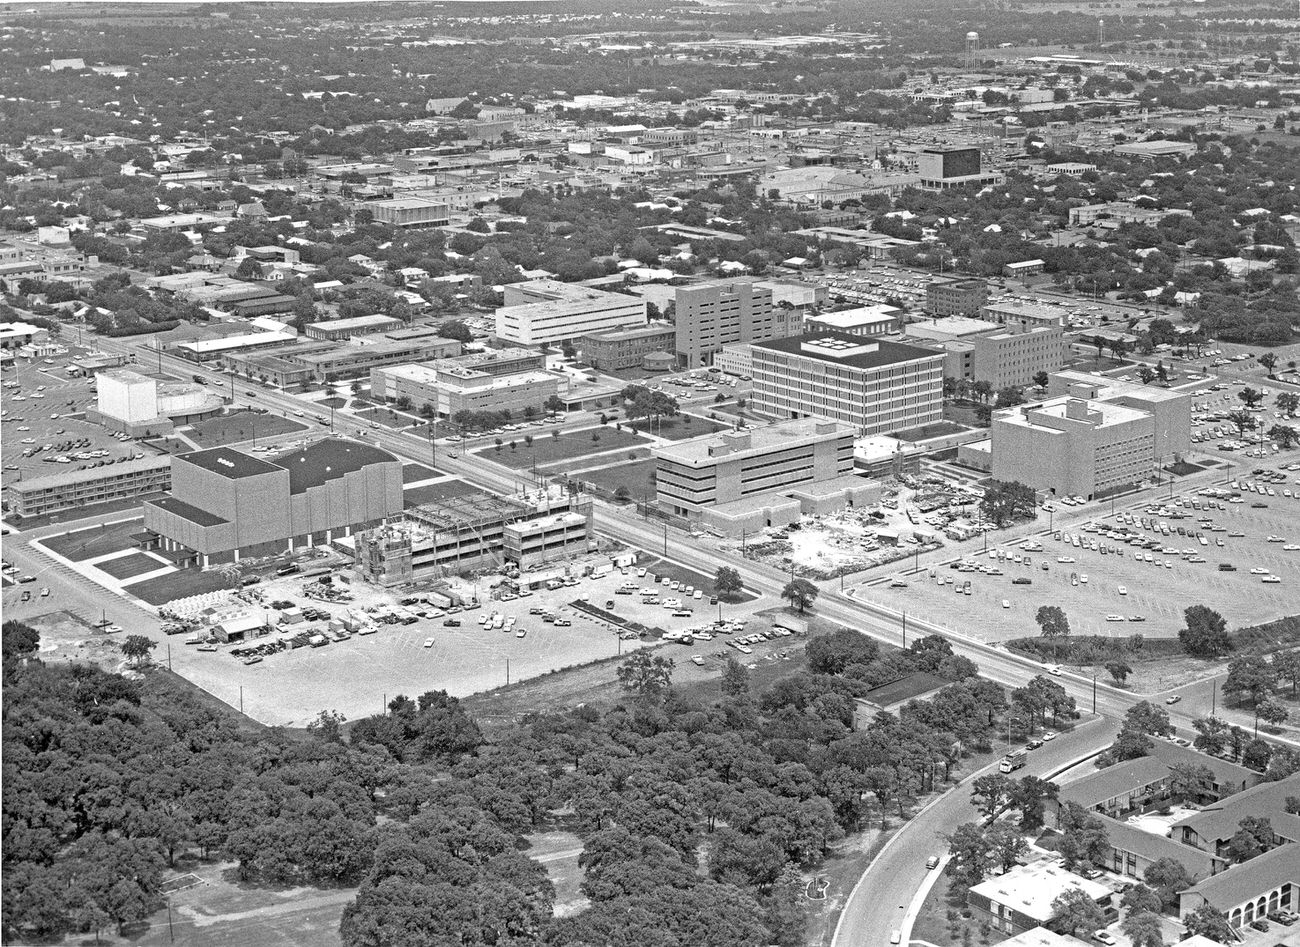 University of Texas at Arlington (U. T. A.) campus and surrounding area, 1970